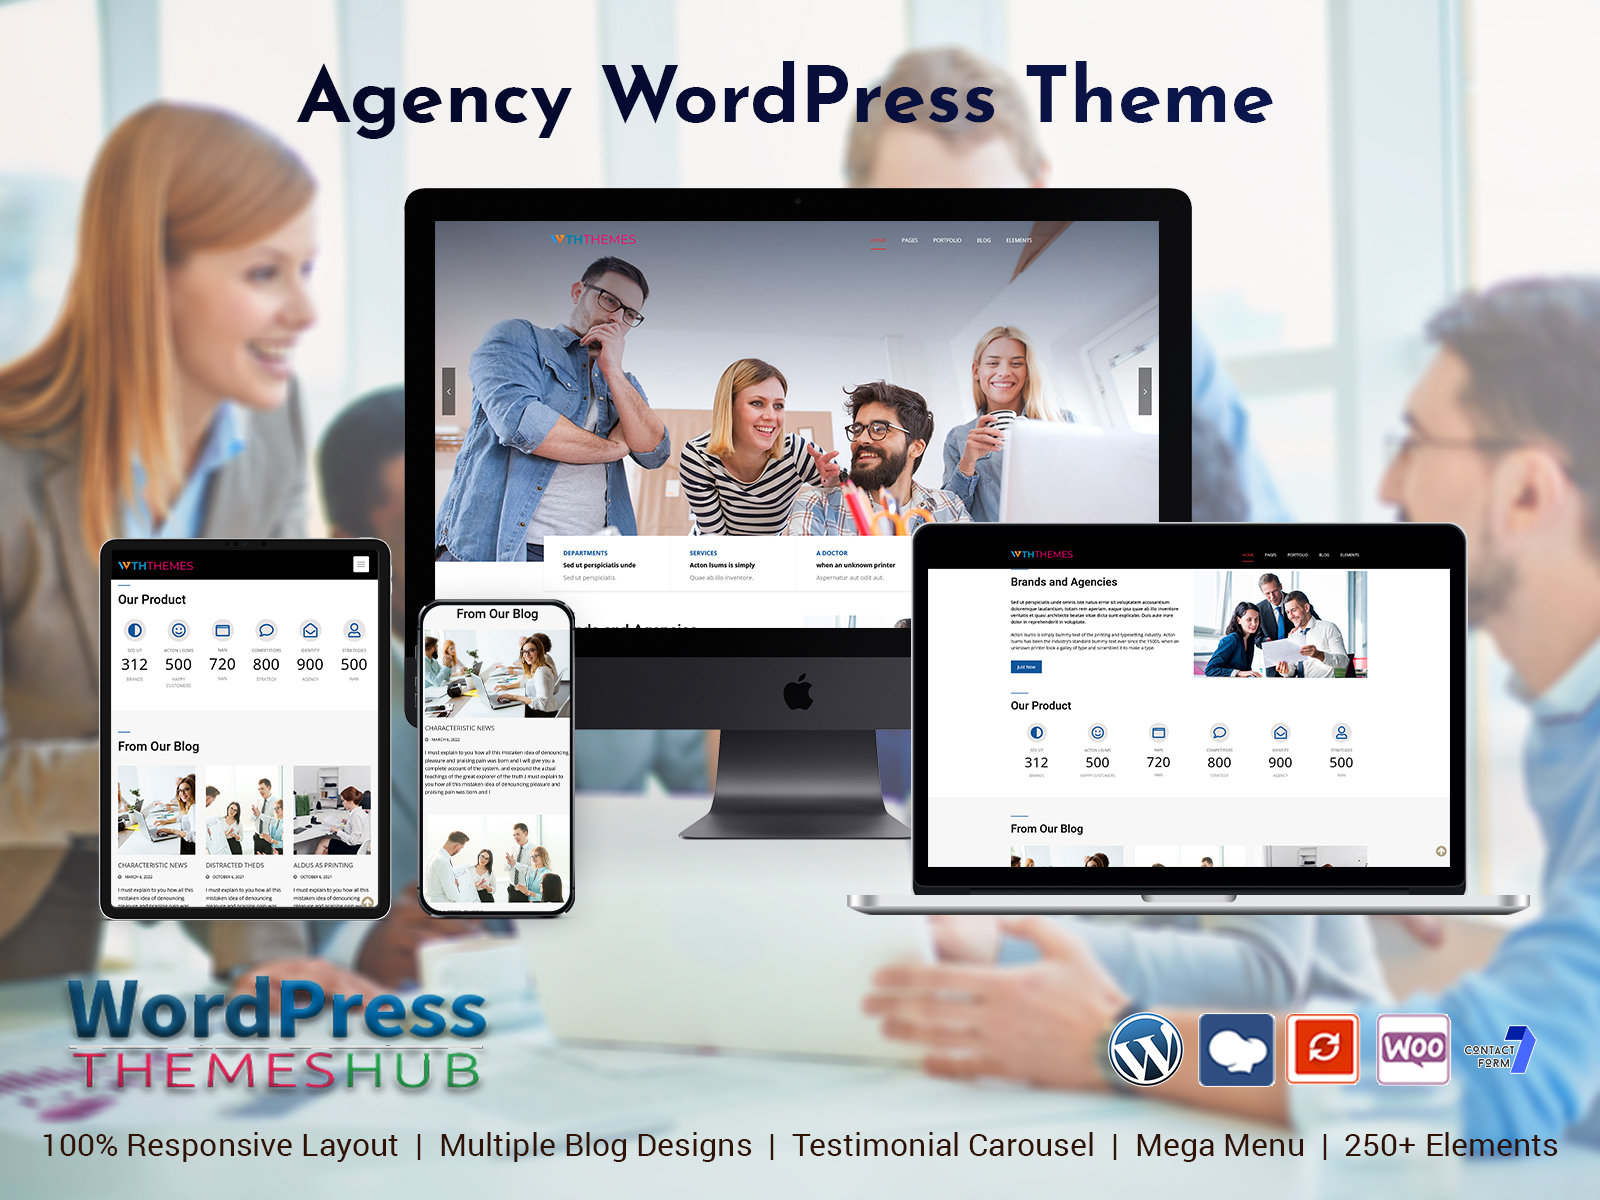 Agency WordPress Theme To Make Digital Agency Website